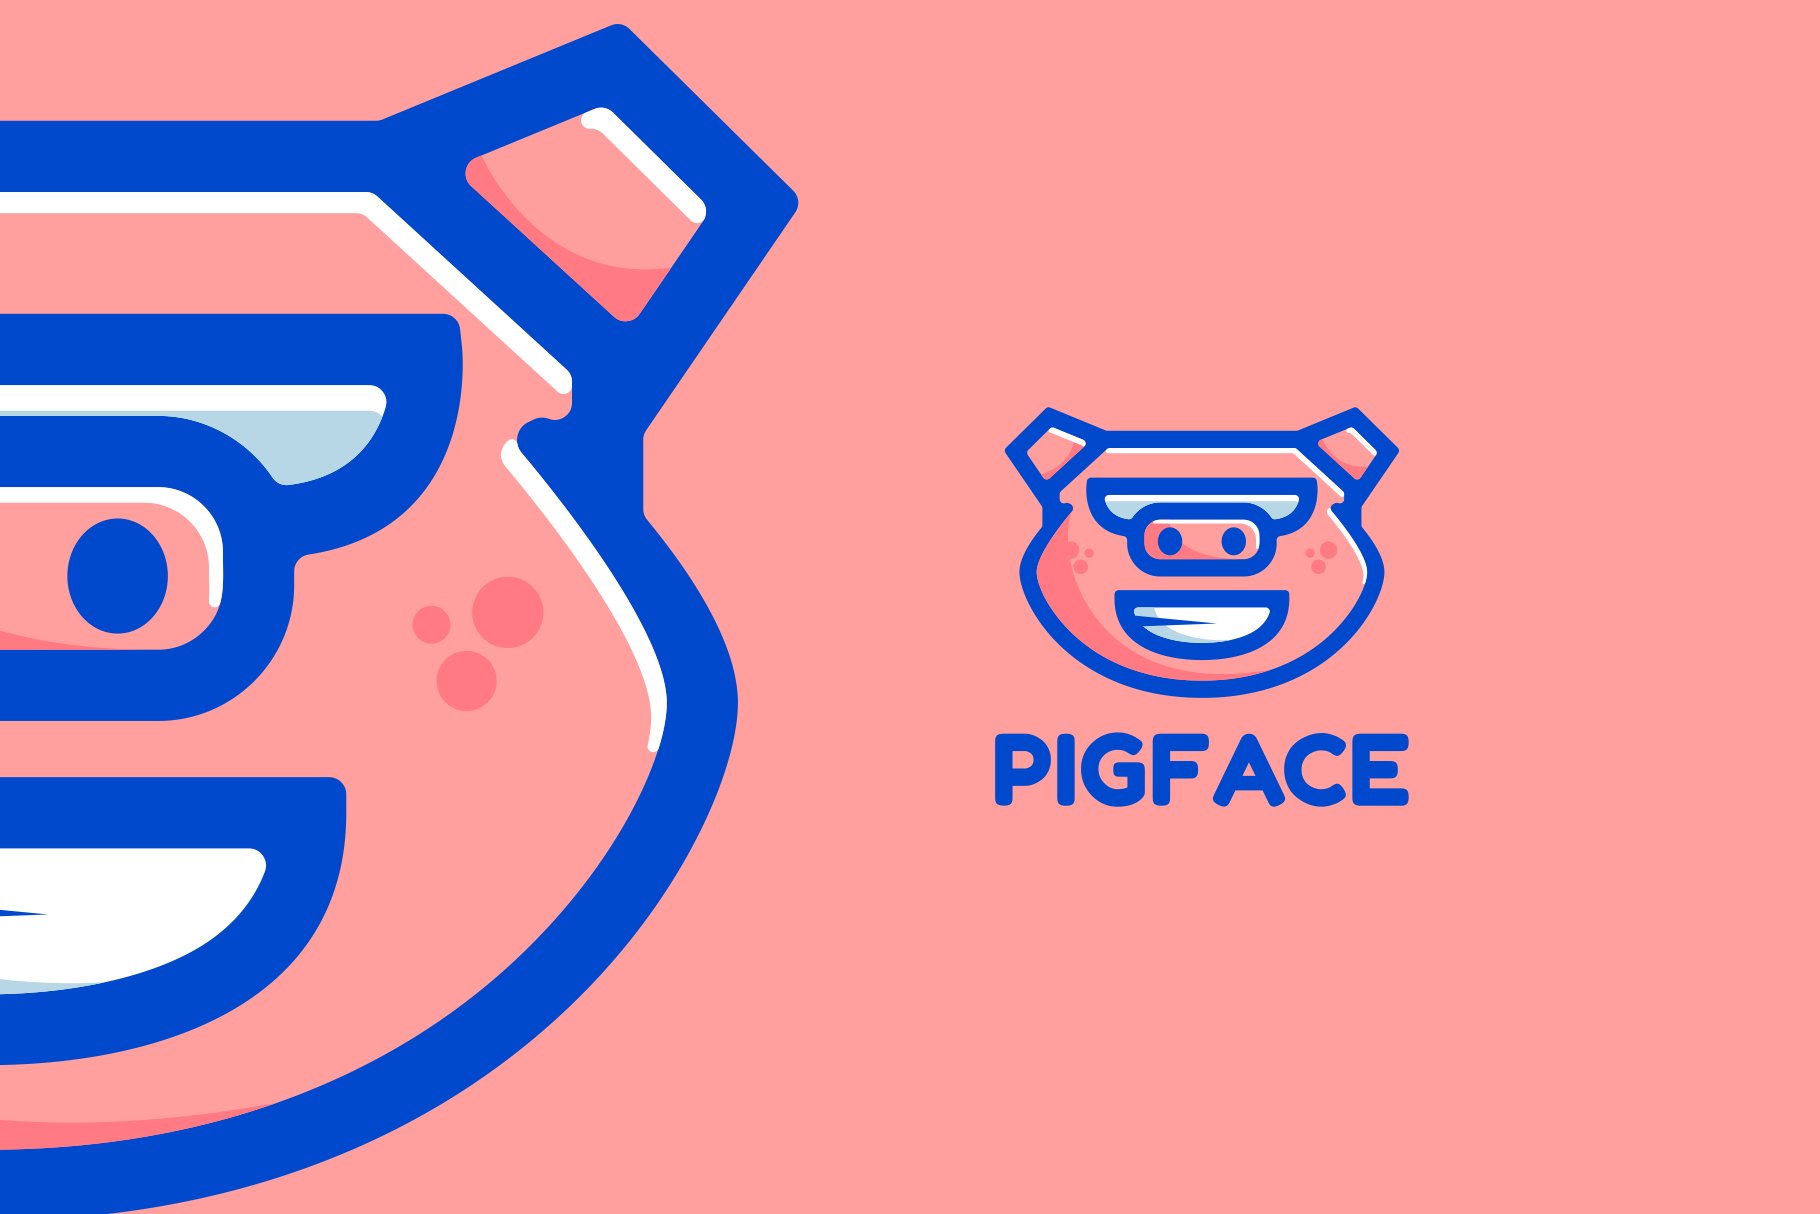 Pig Color Line Art Logo cover image.